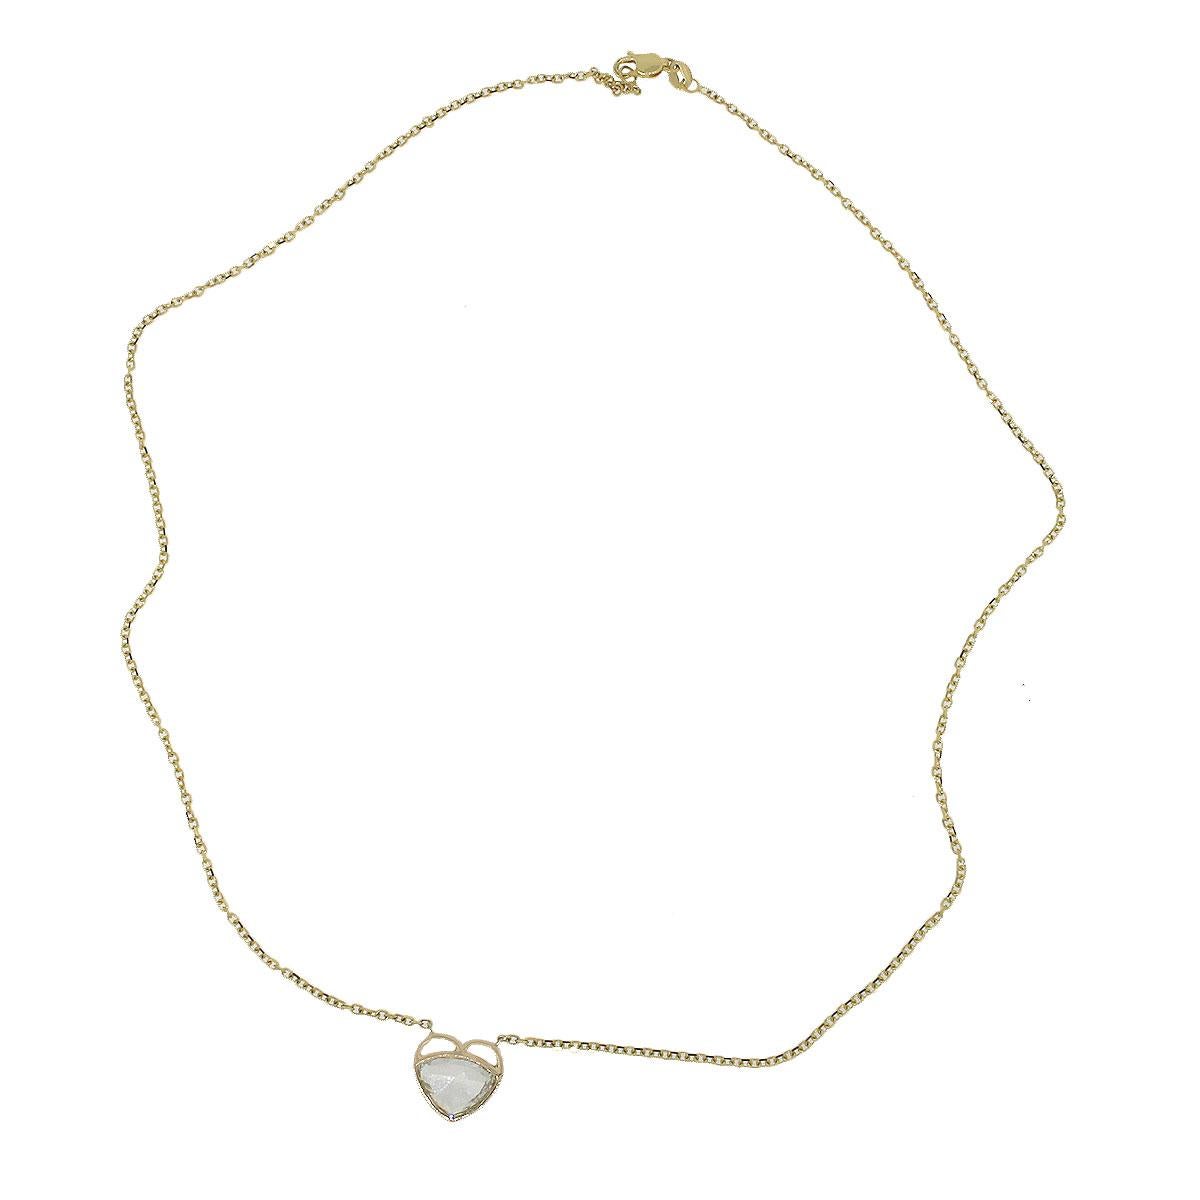 Round Cut 2.23 Carat GIA Diamond Heart Shaped Bezel Necklace